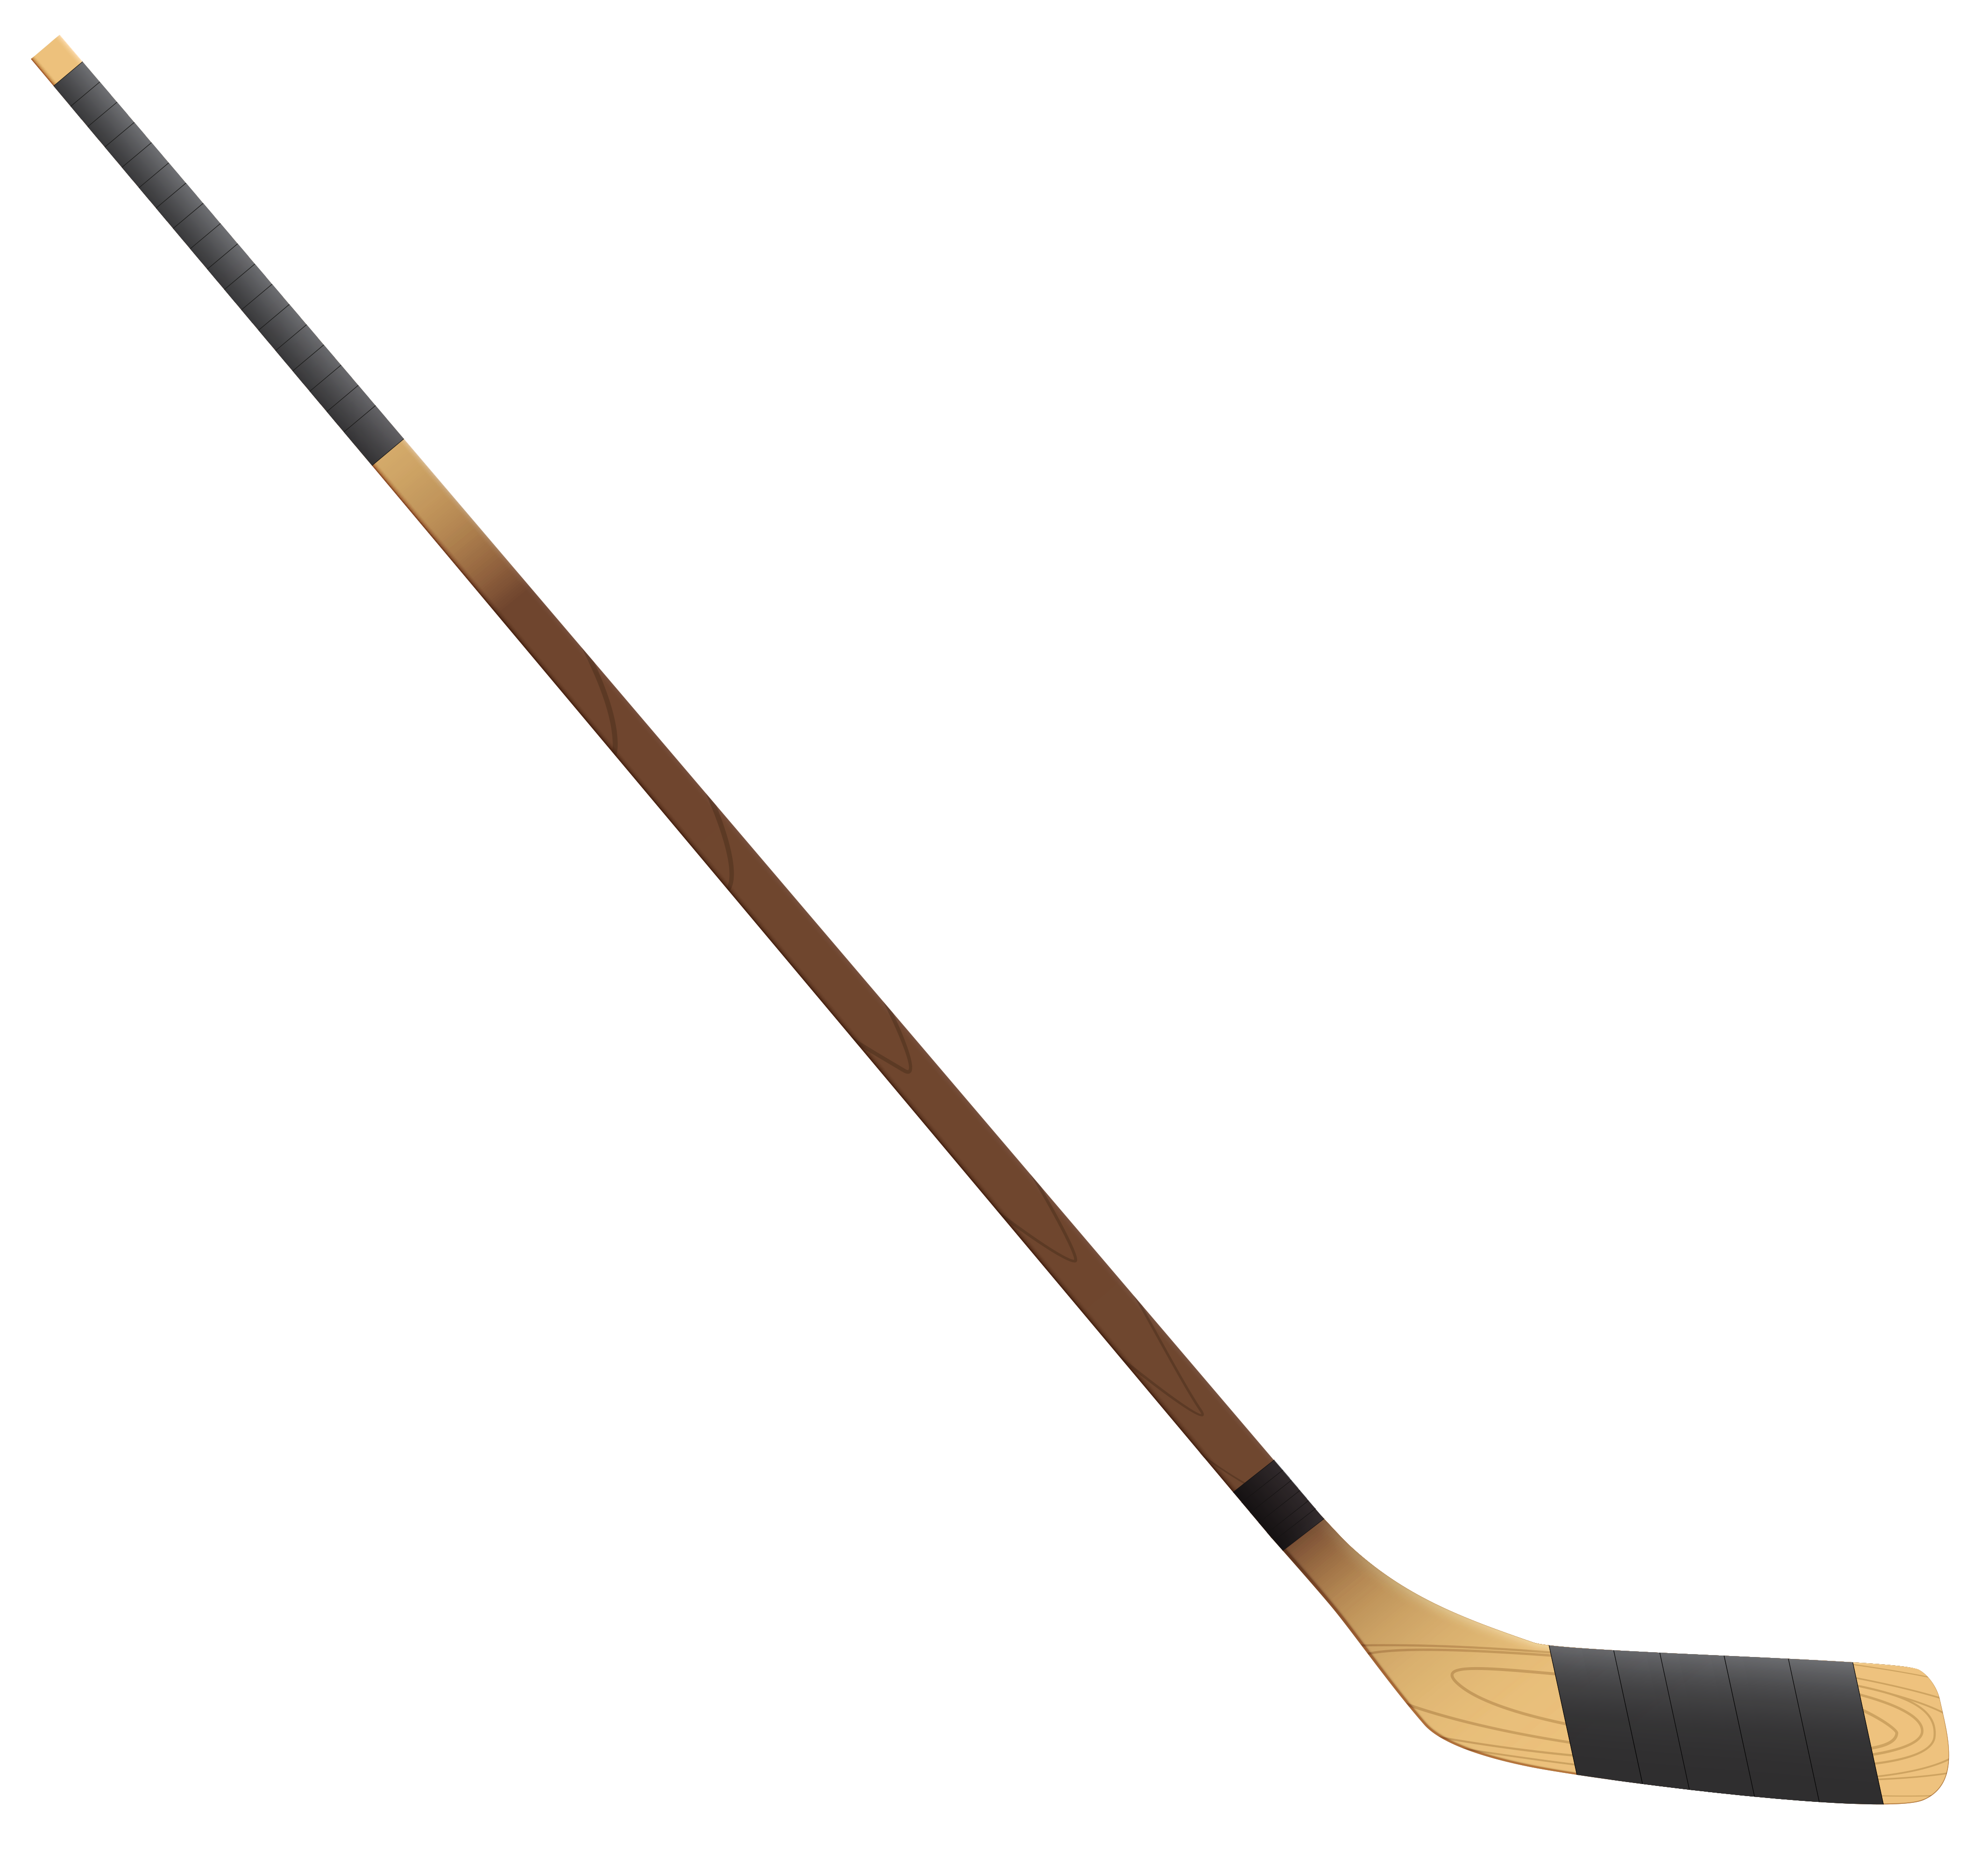 Hockey Stick Silhouette